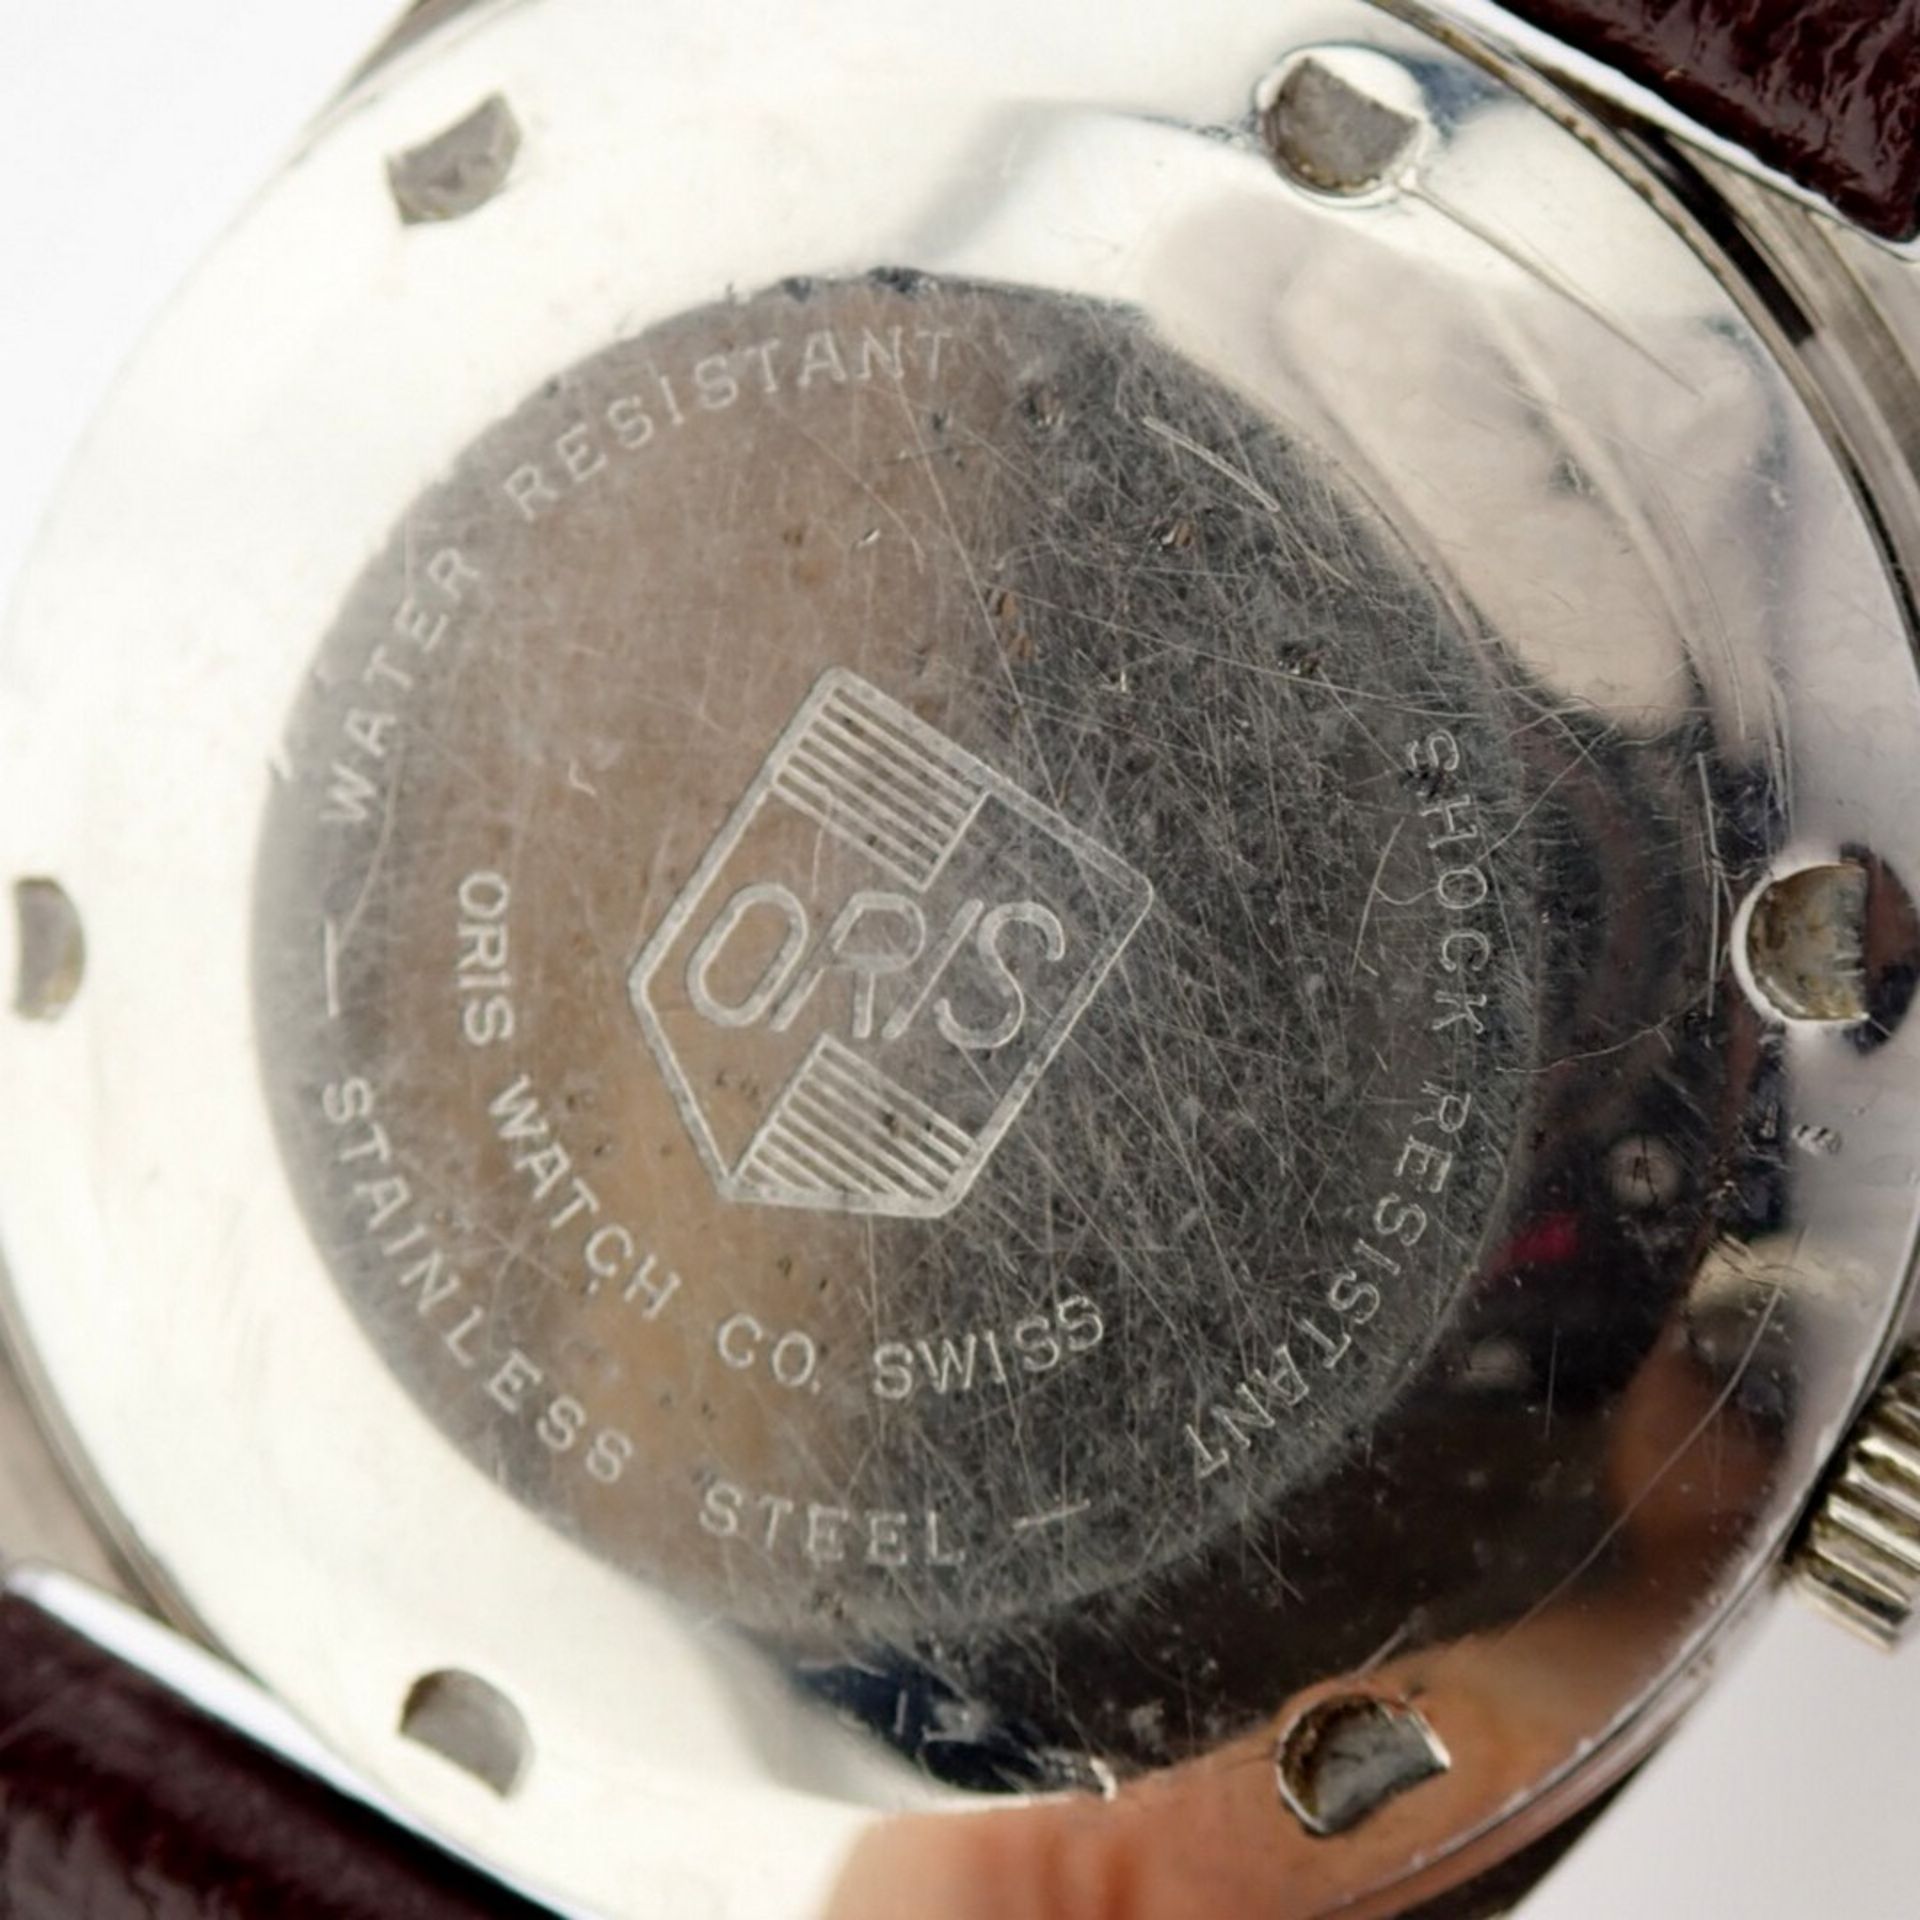 Oris / Oris Star Automatic Twen - Gentlemen's Steel Wrist Watch - Image 9 of 10